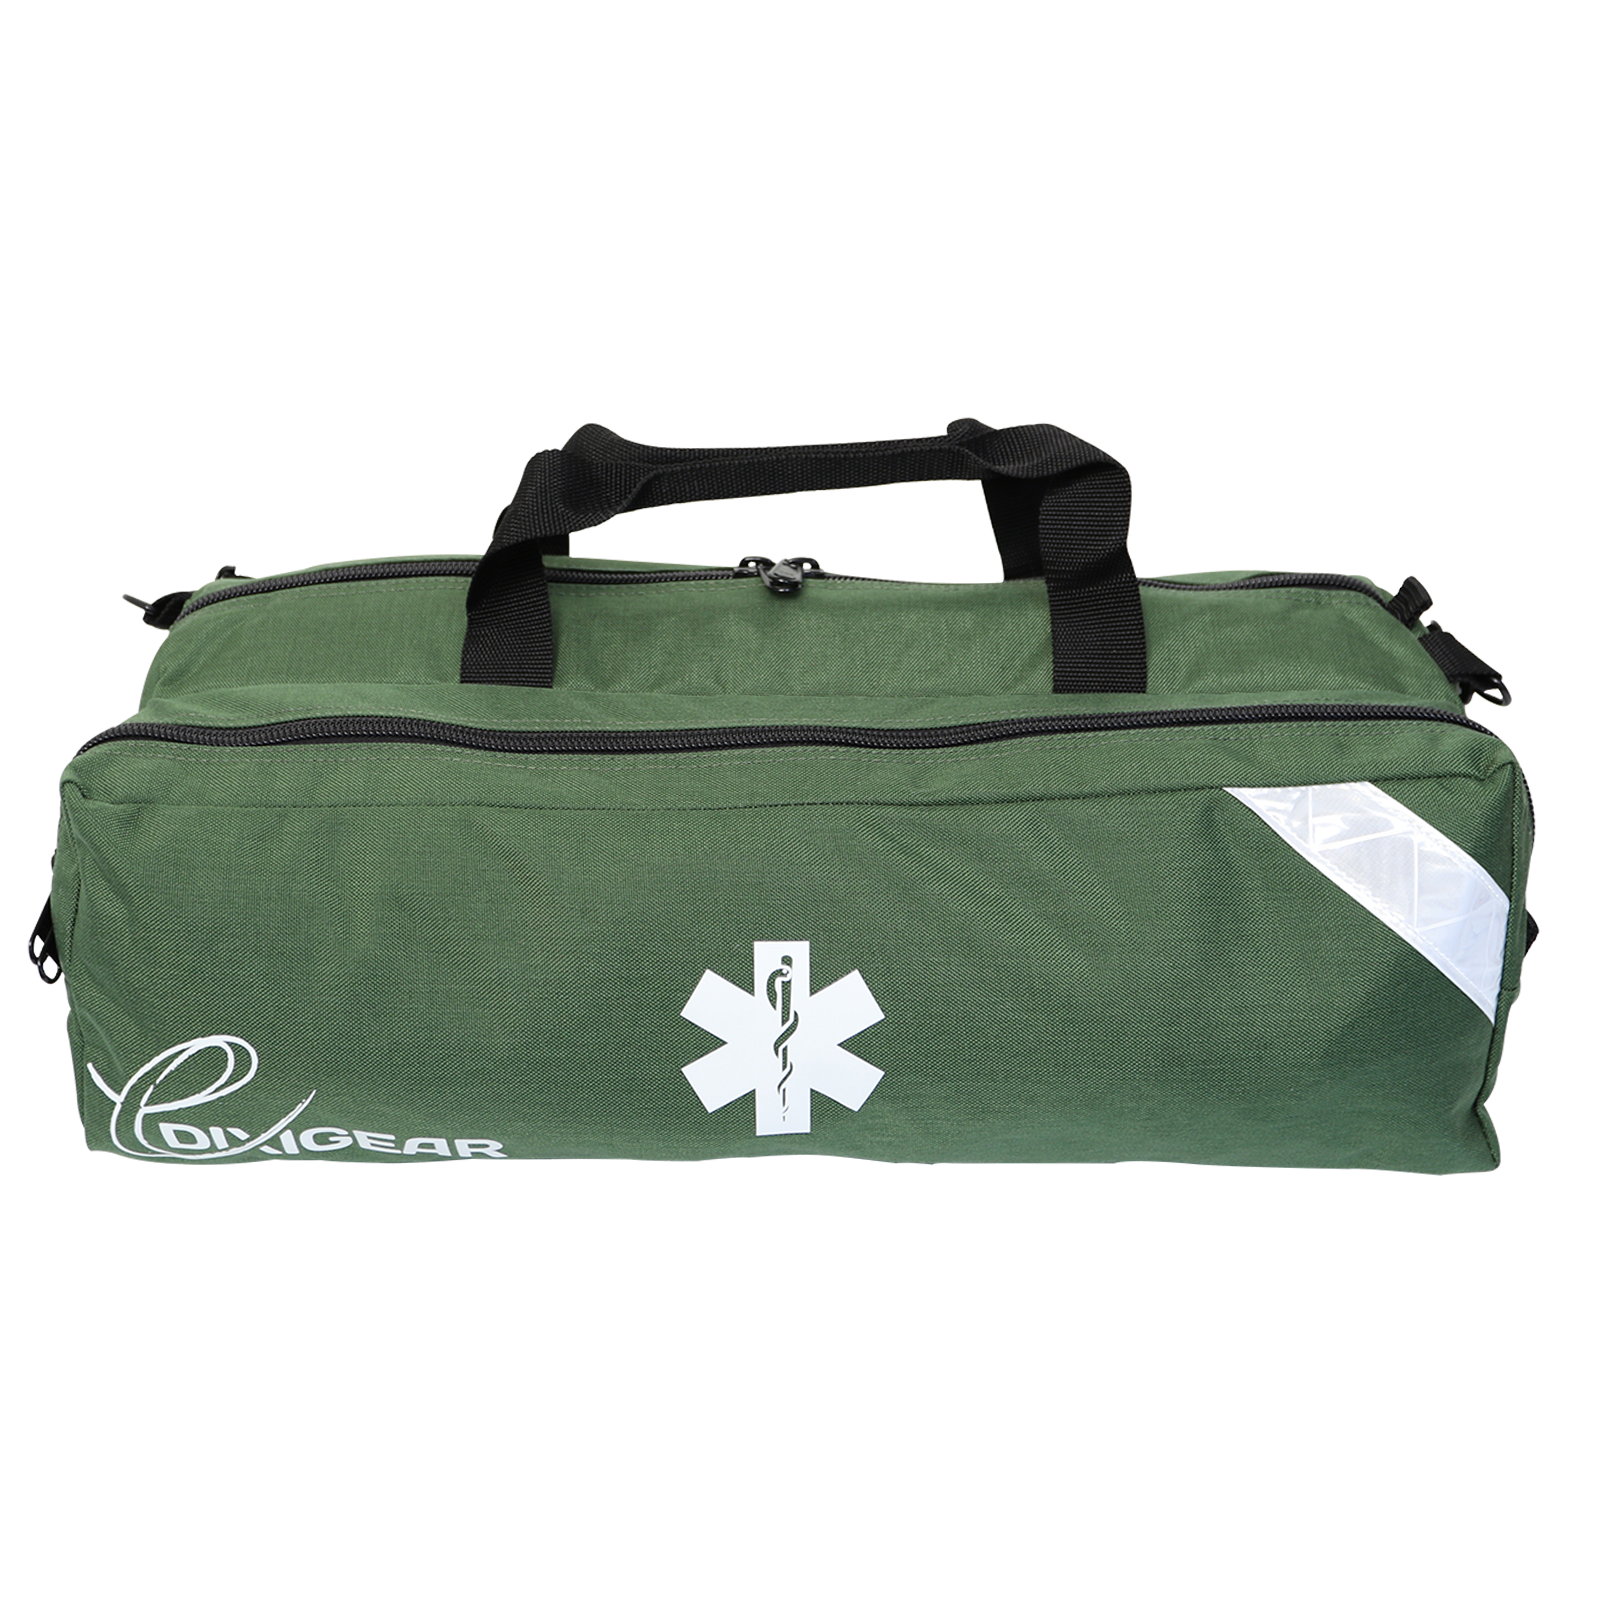 O2 Duffle Responder Bag w/ Side Pocket - Green